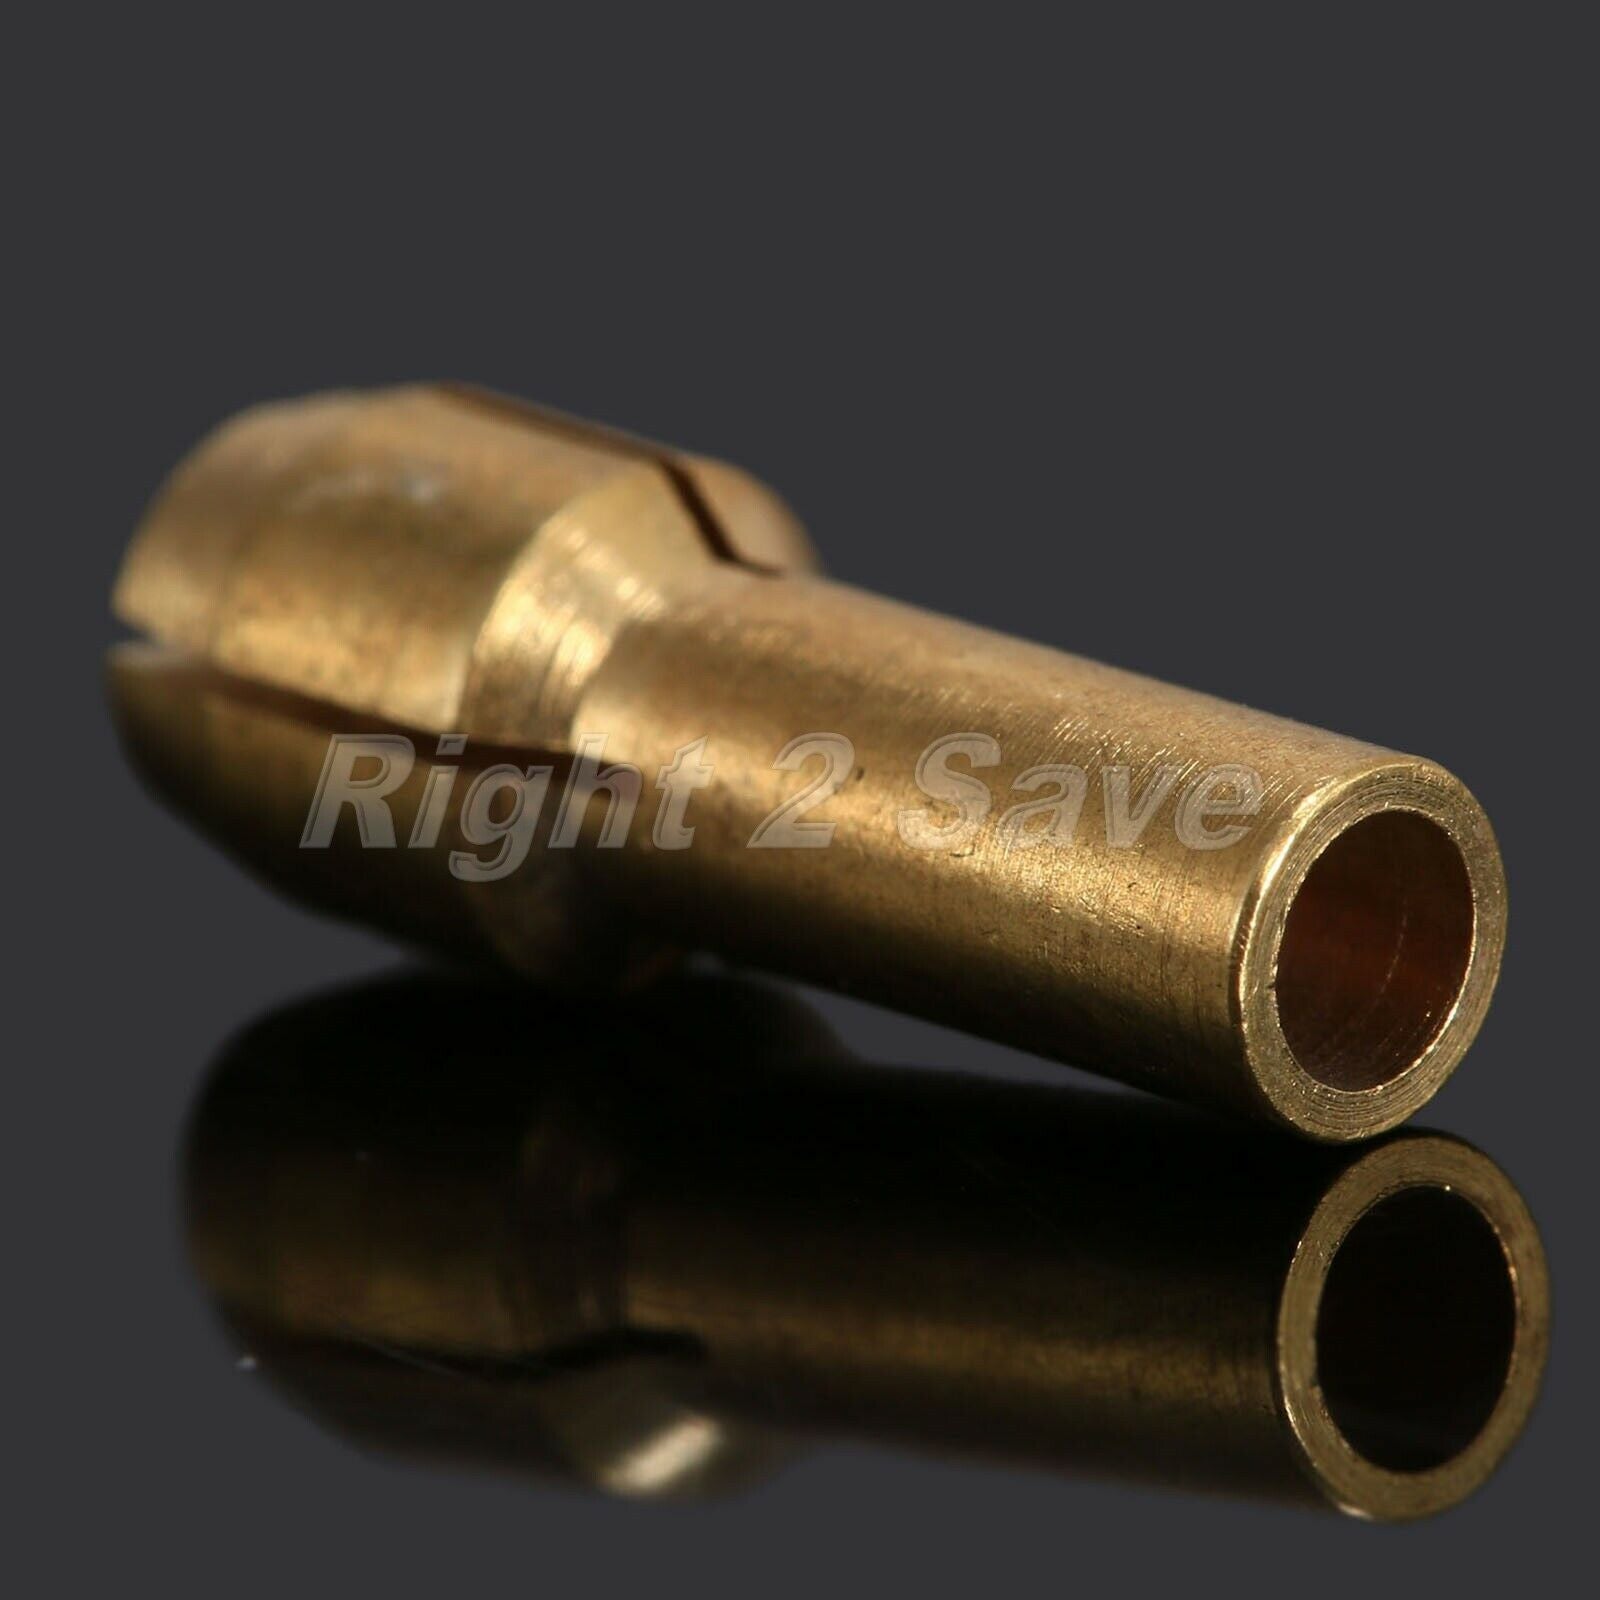 0.5mm-3.2mm Brass Collet Chuck 4.3mm Shank &Long M8 Keyless Drill Chuck Tool R2S